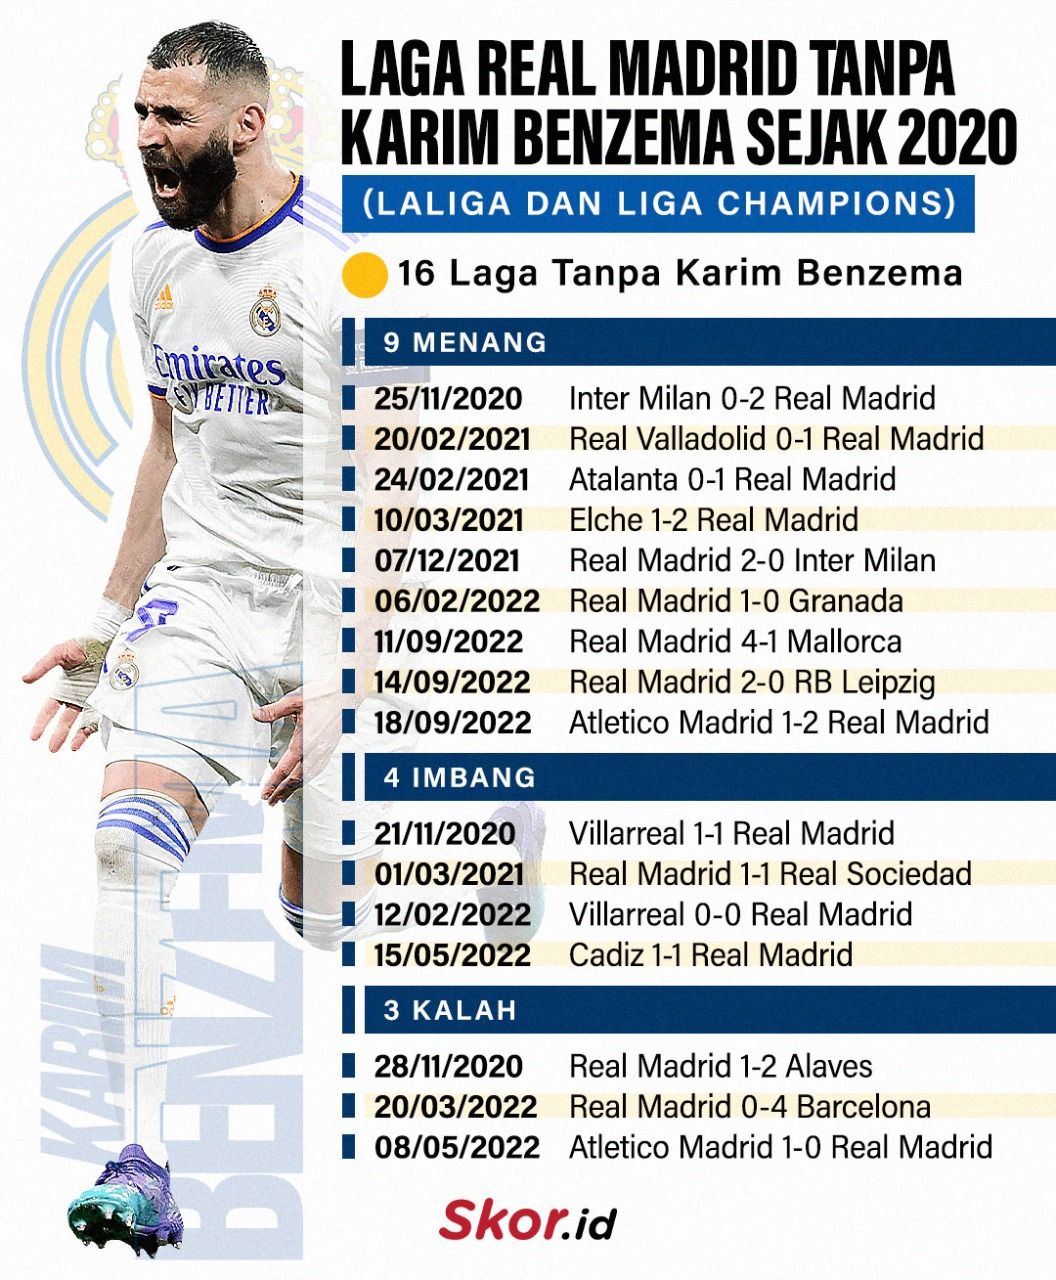 Laga Real Madrid Tanpa Karim Benzema sejak 2020